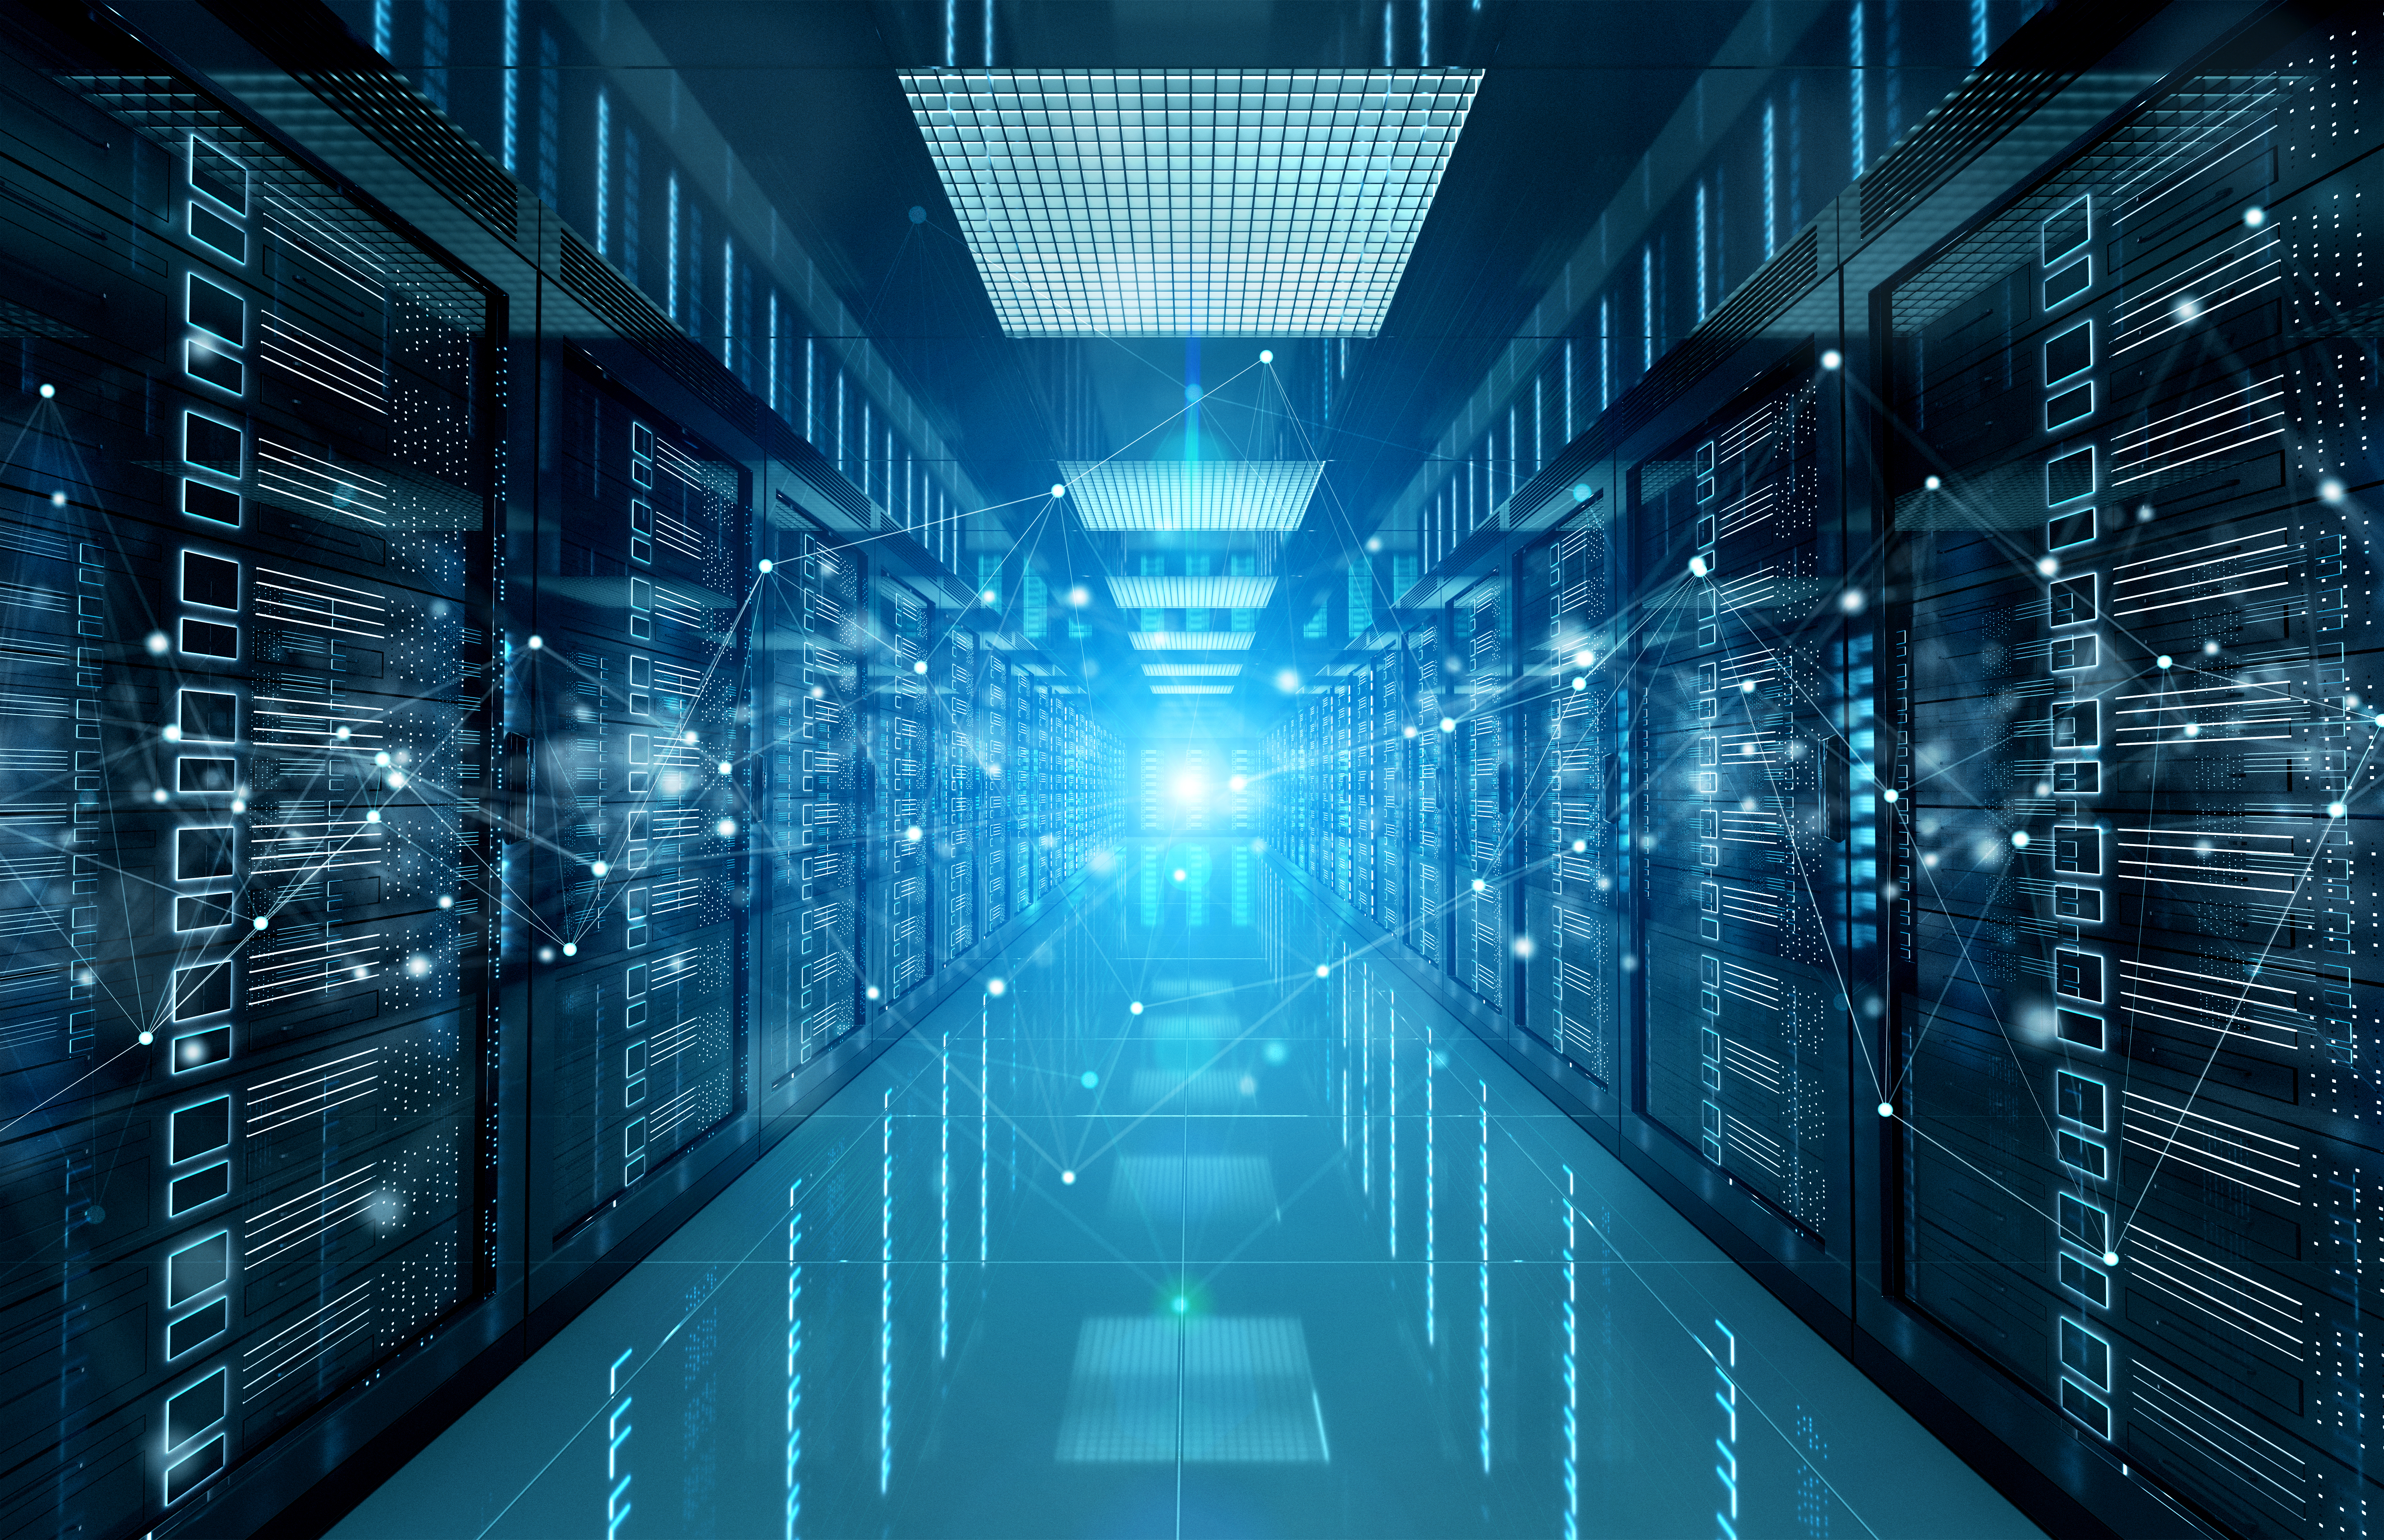 Connection network in dark servers data center room storage system